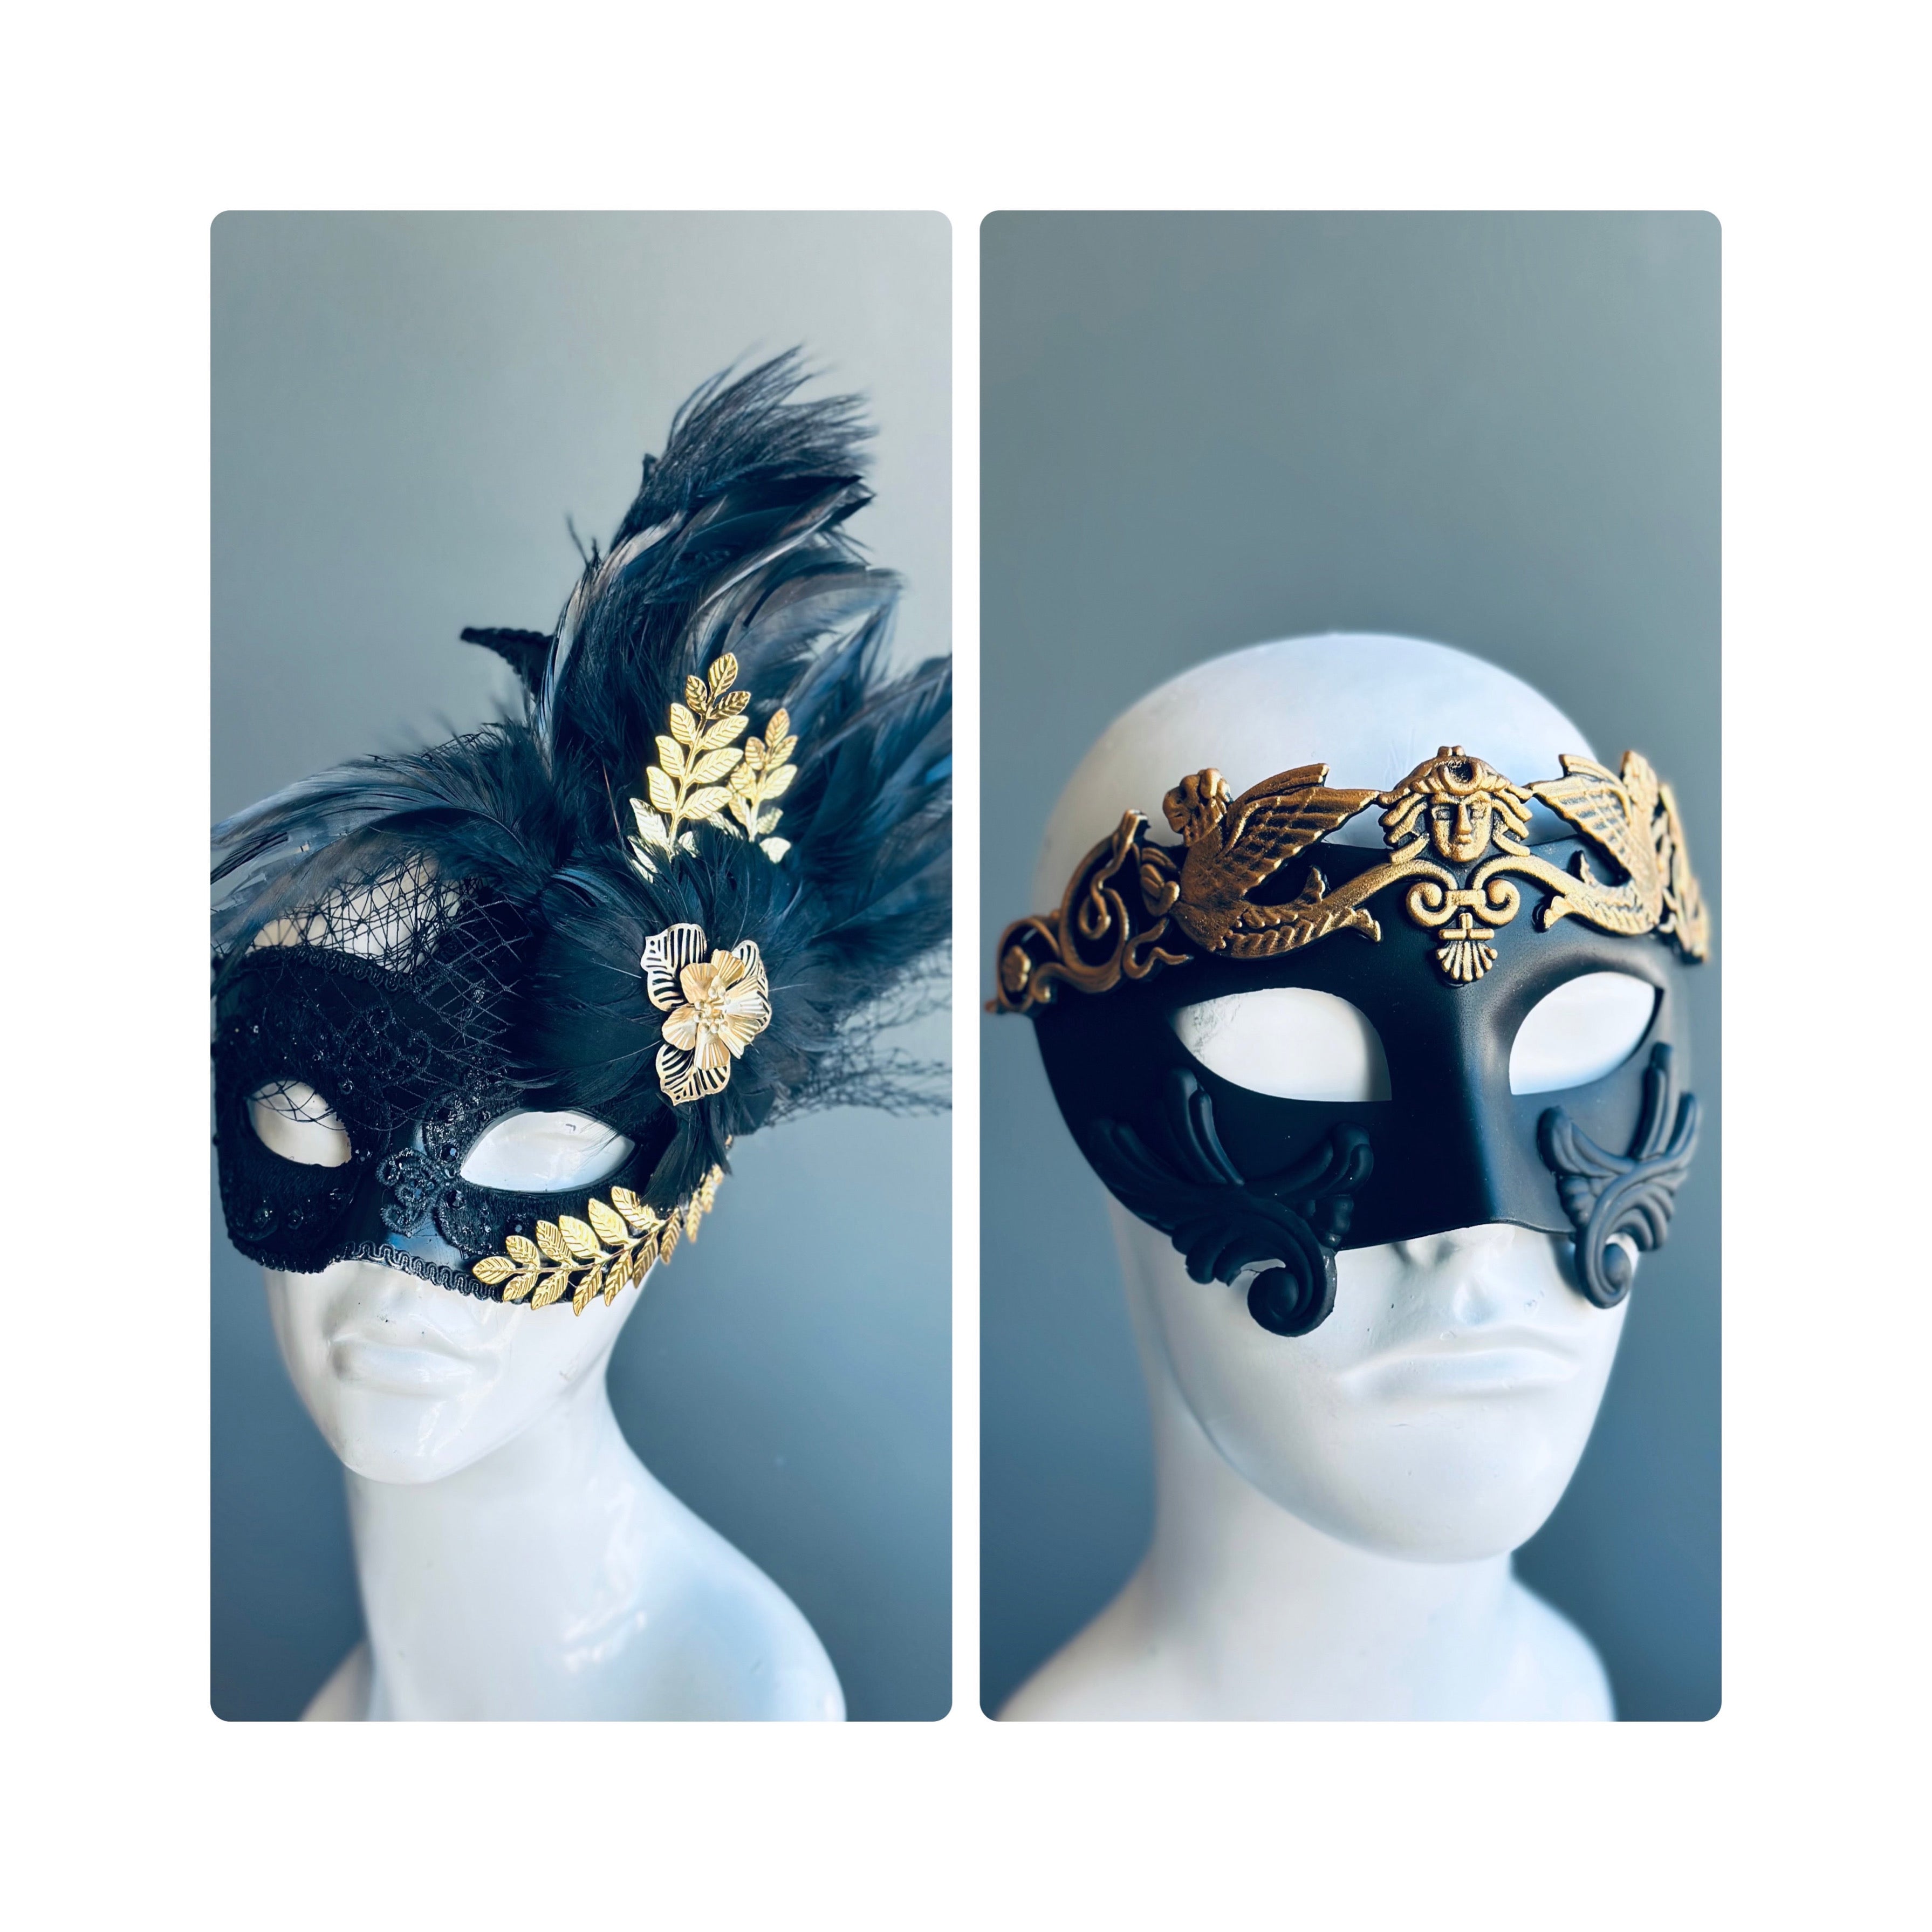 Roman Greek Emperor Masquerade Venetian Unpainted Mask - White 